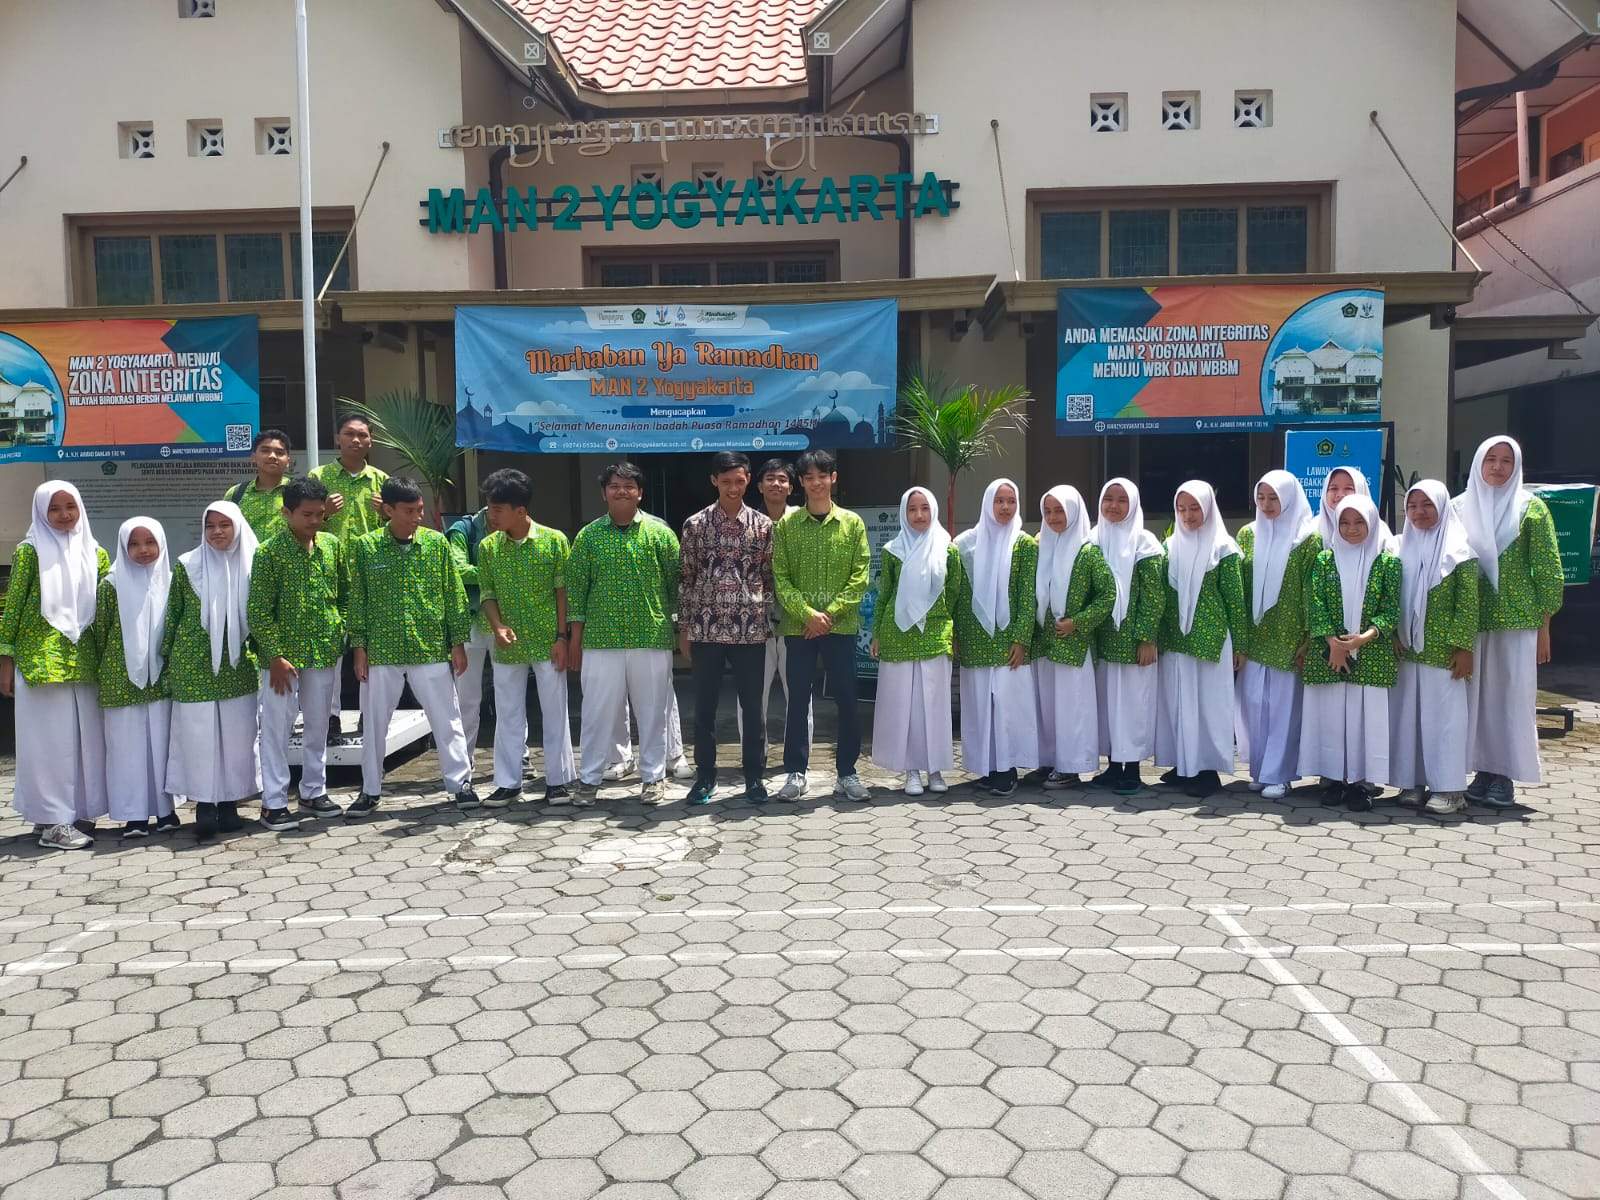 Kelas Multimedia MAN 2 Yogyakarta Belajar Bersama Konten Creator Tik Tok